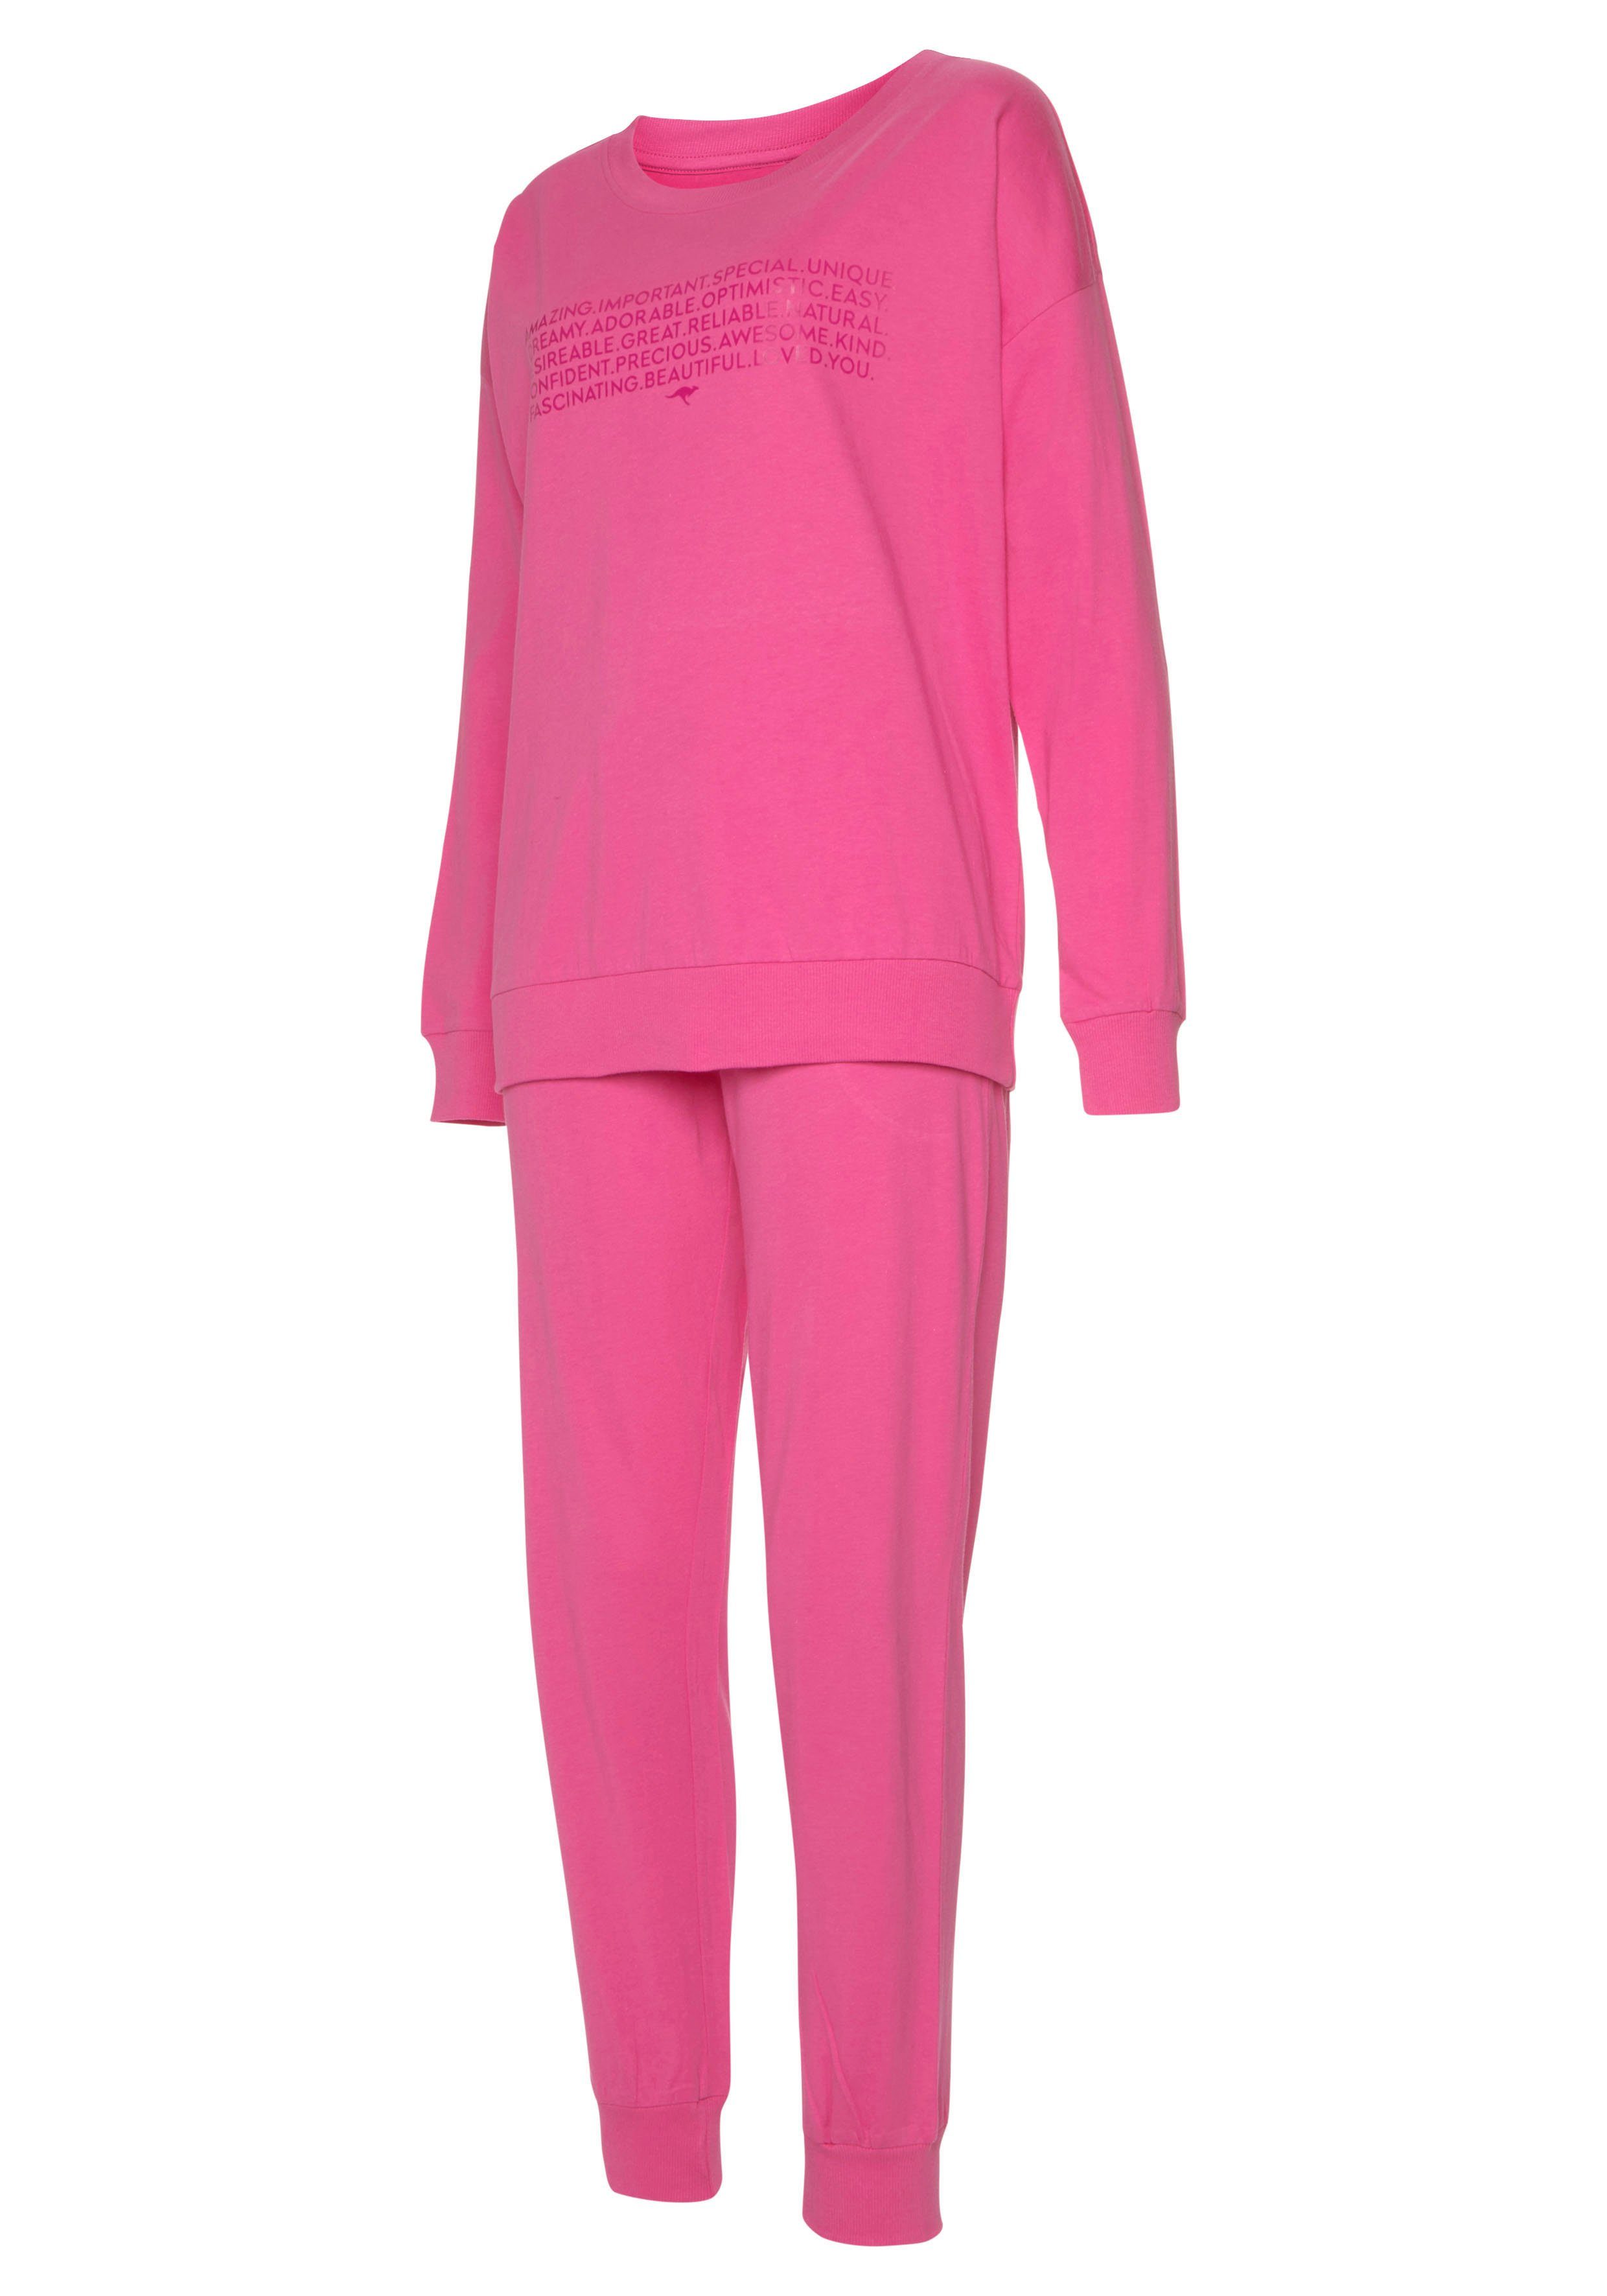 KangaROOS Pyjama (2 Stück) mit 1 tlg., Slogan-Frontdruck pink